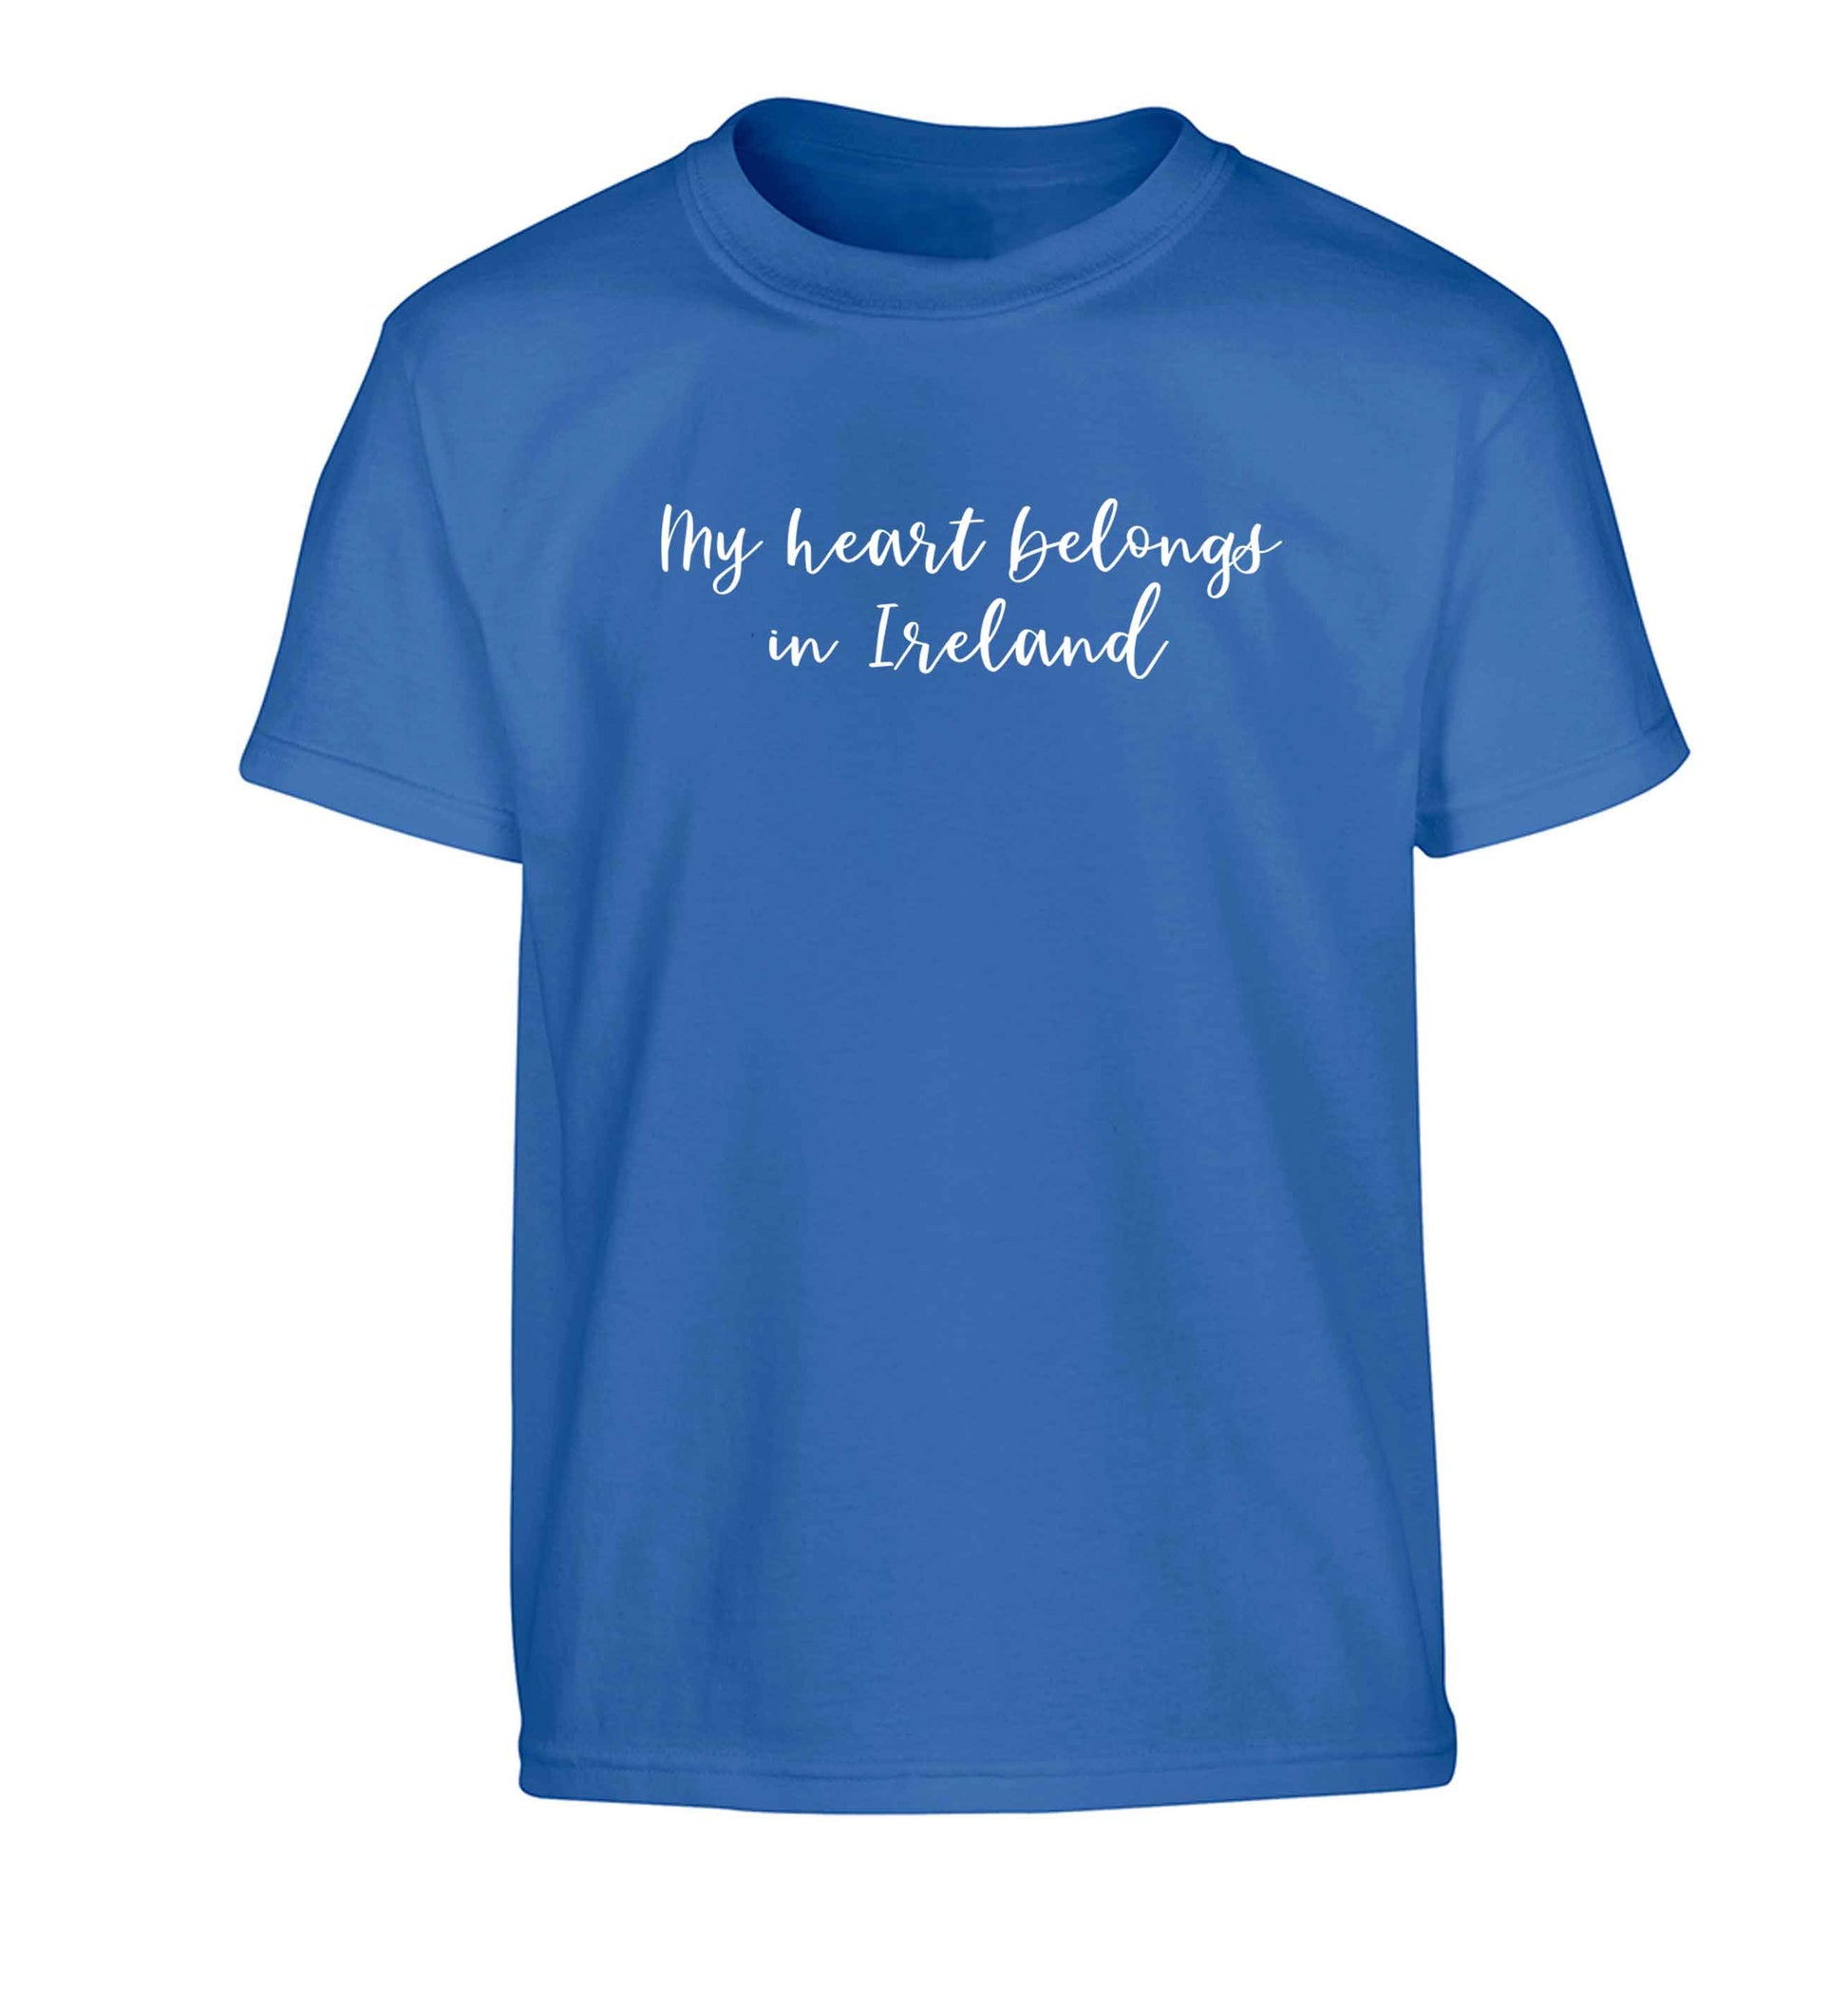 My heart belongs in Ireland Children's blue Tshirt 12-13 Years